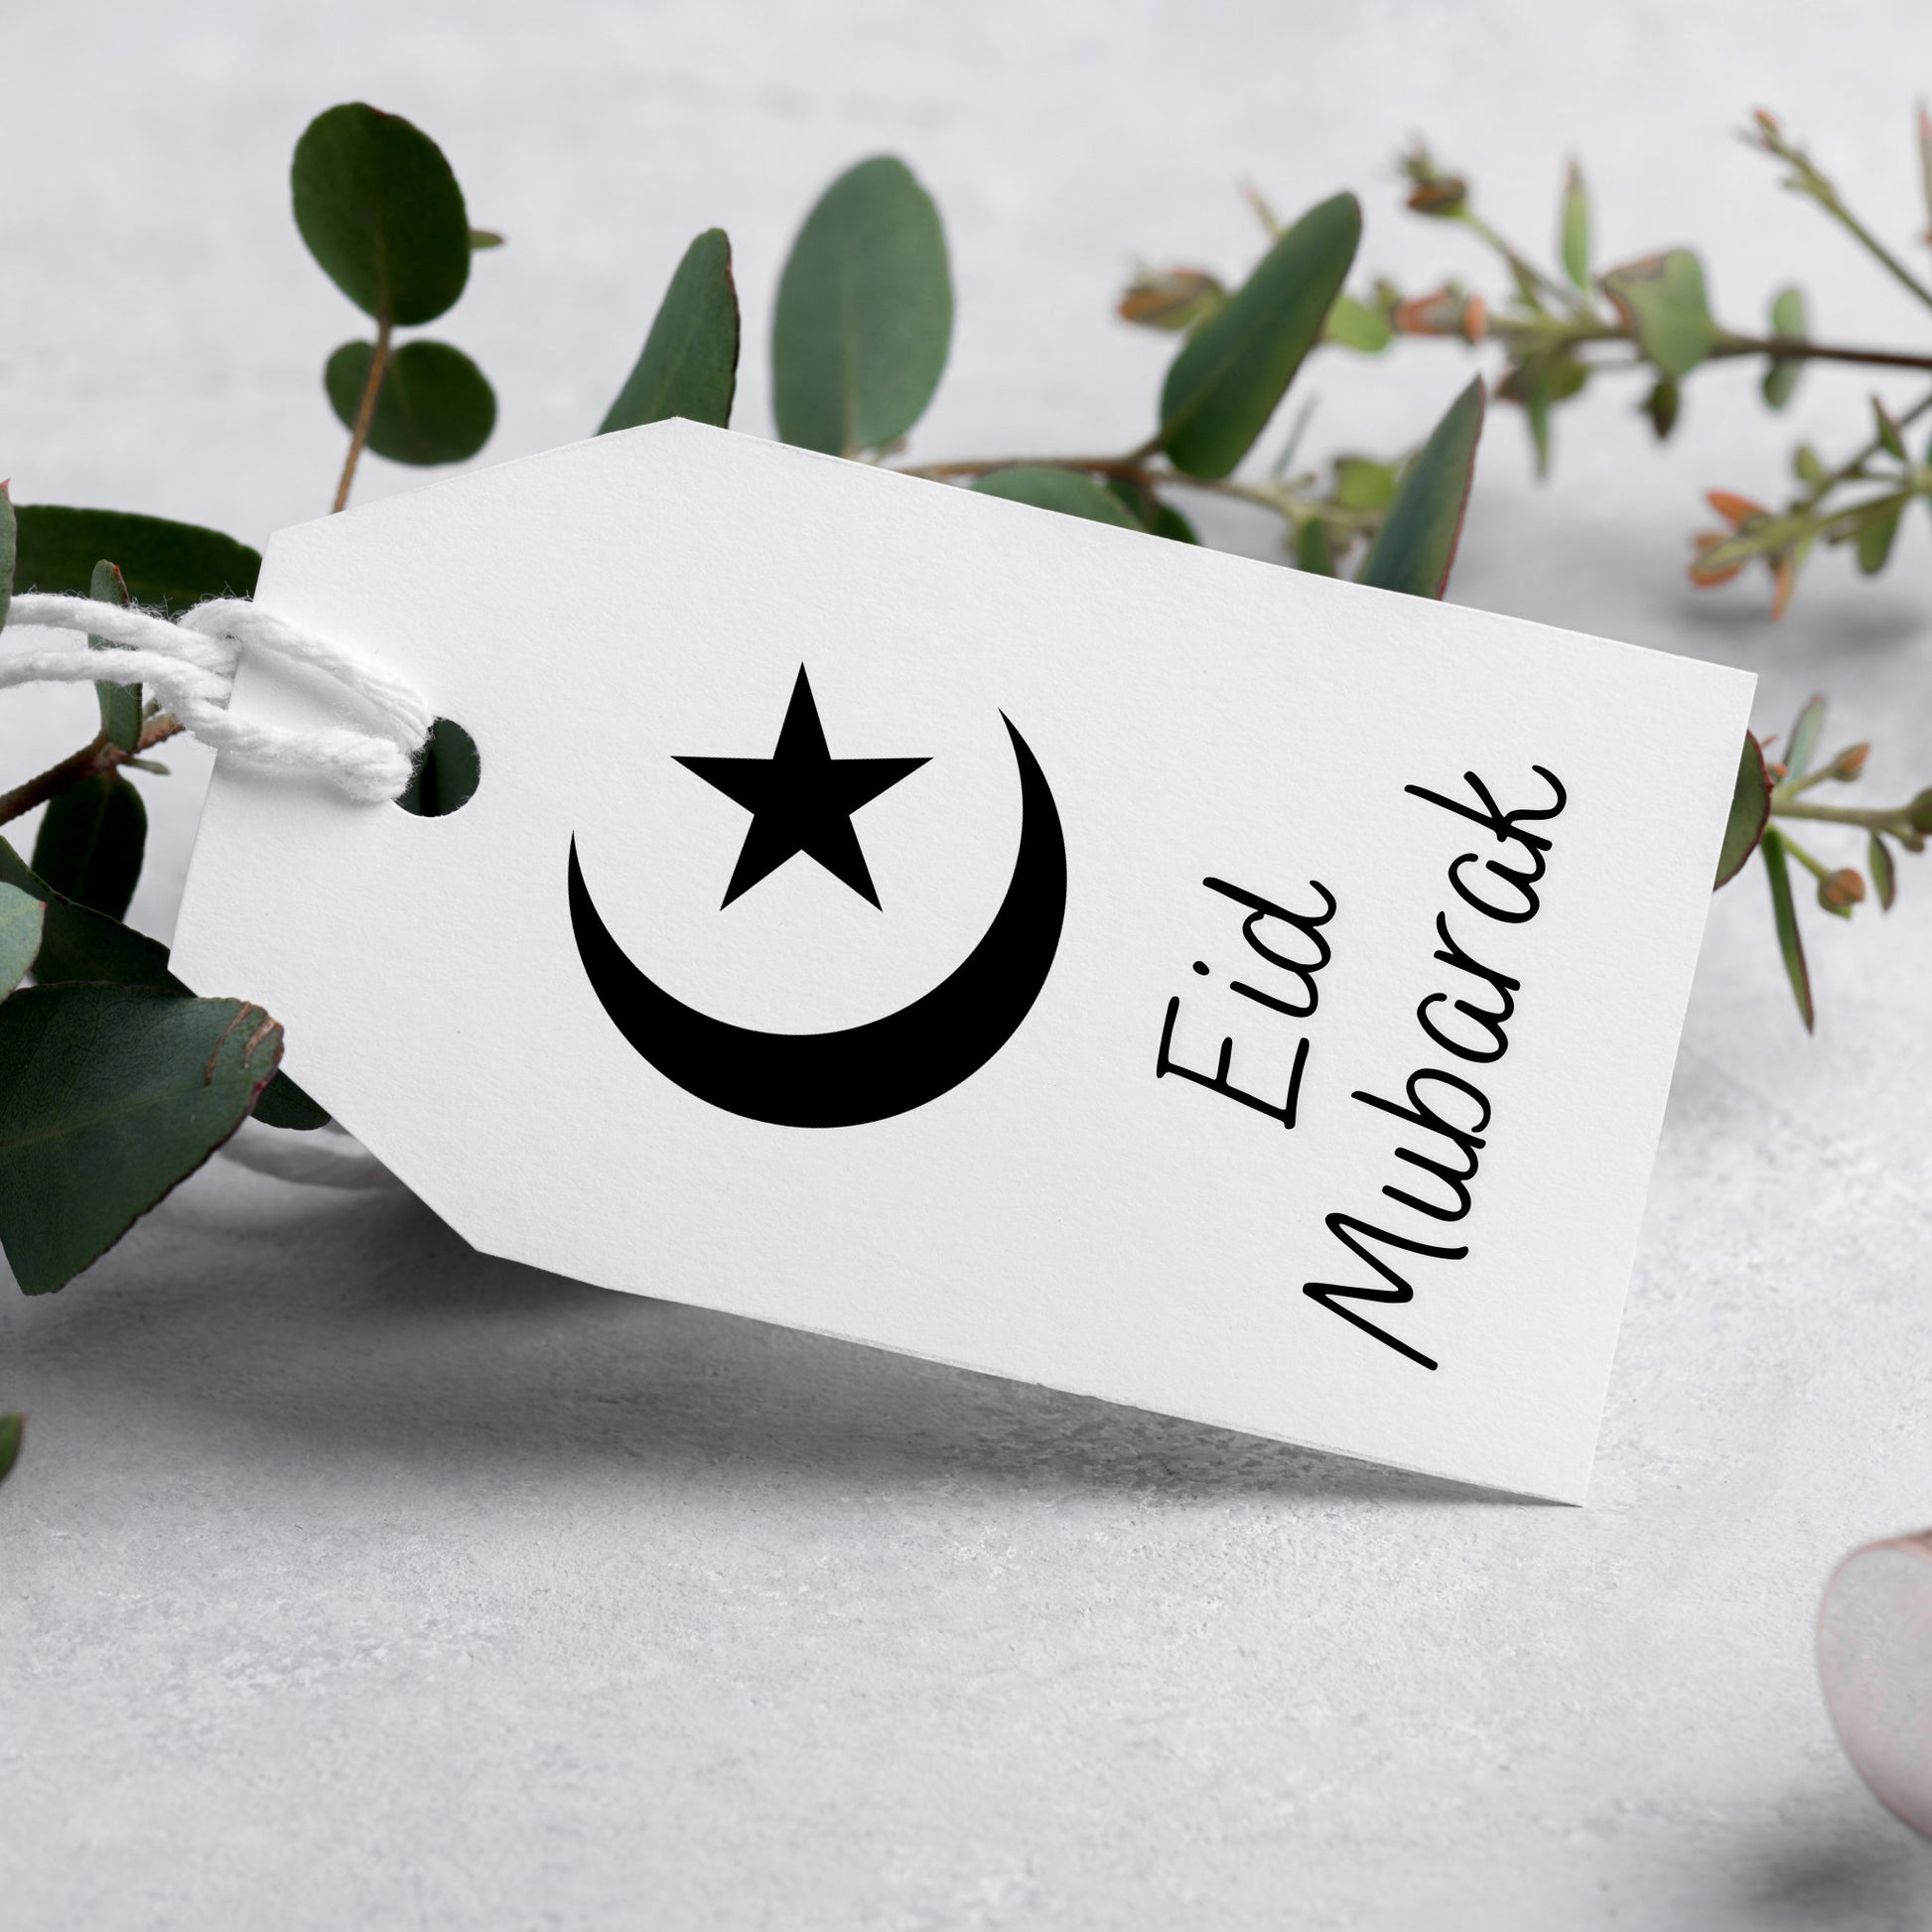 Eid Mubarak Gift Tag, Instant Digital Download, Printable Gift Tag, Eid Decoration, Modern Gift Tag, 9 Printable Tags, Ramadan Kareem Decor